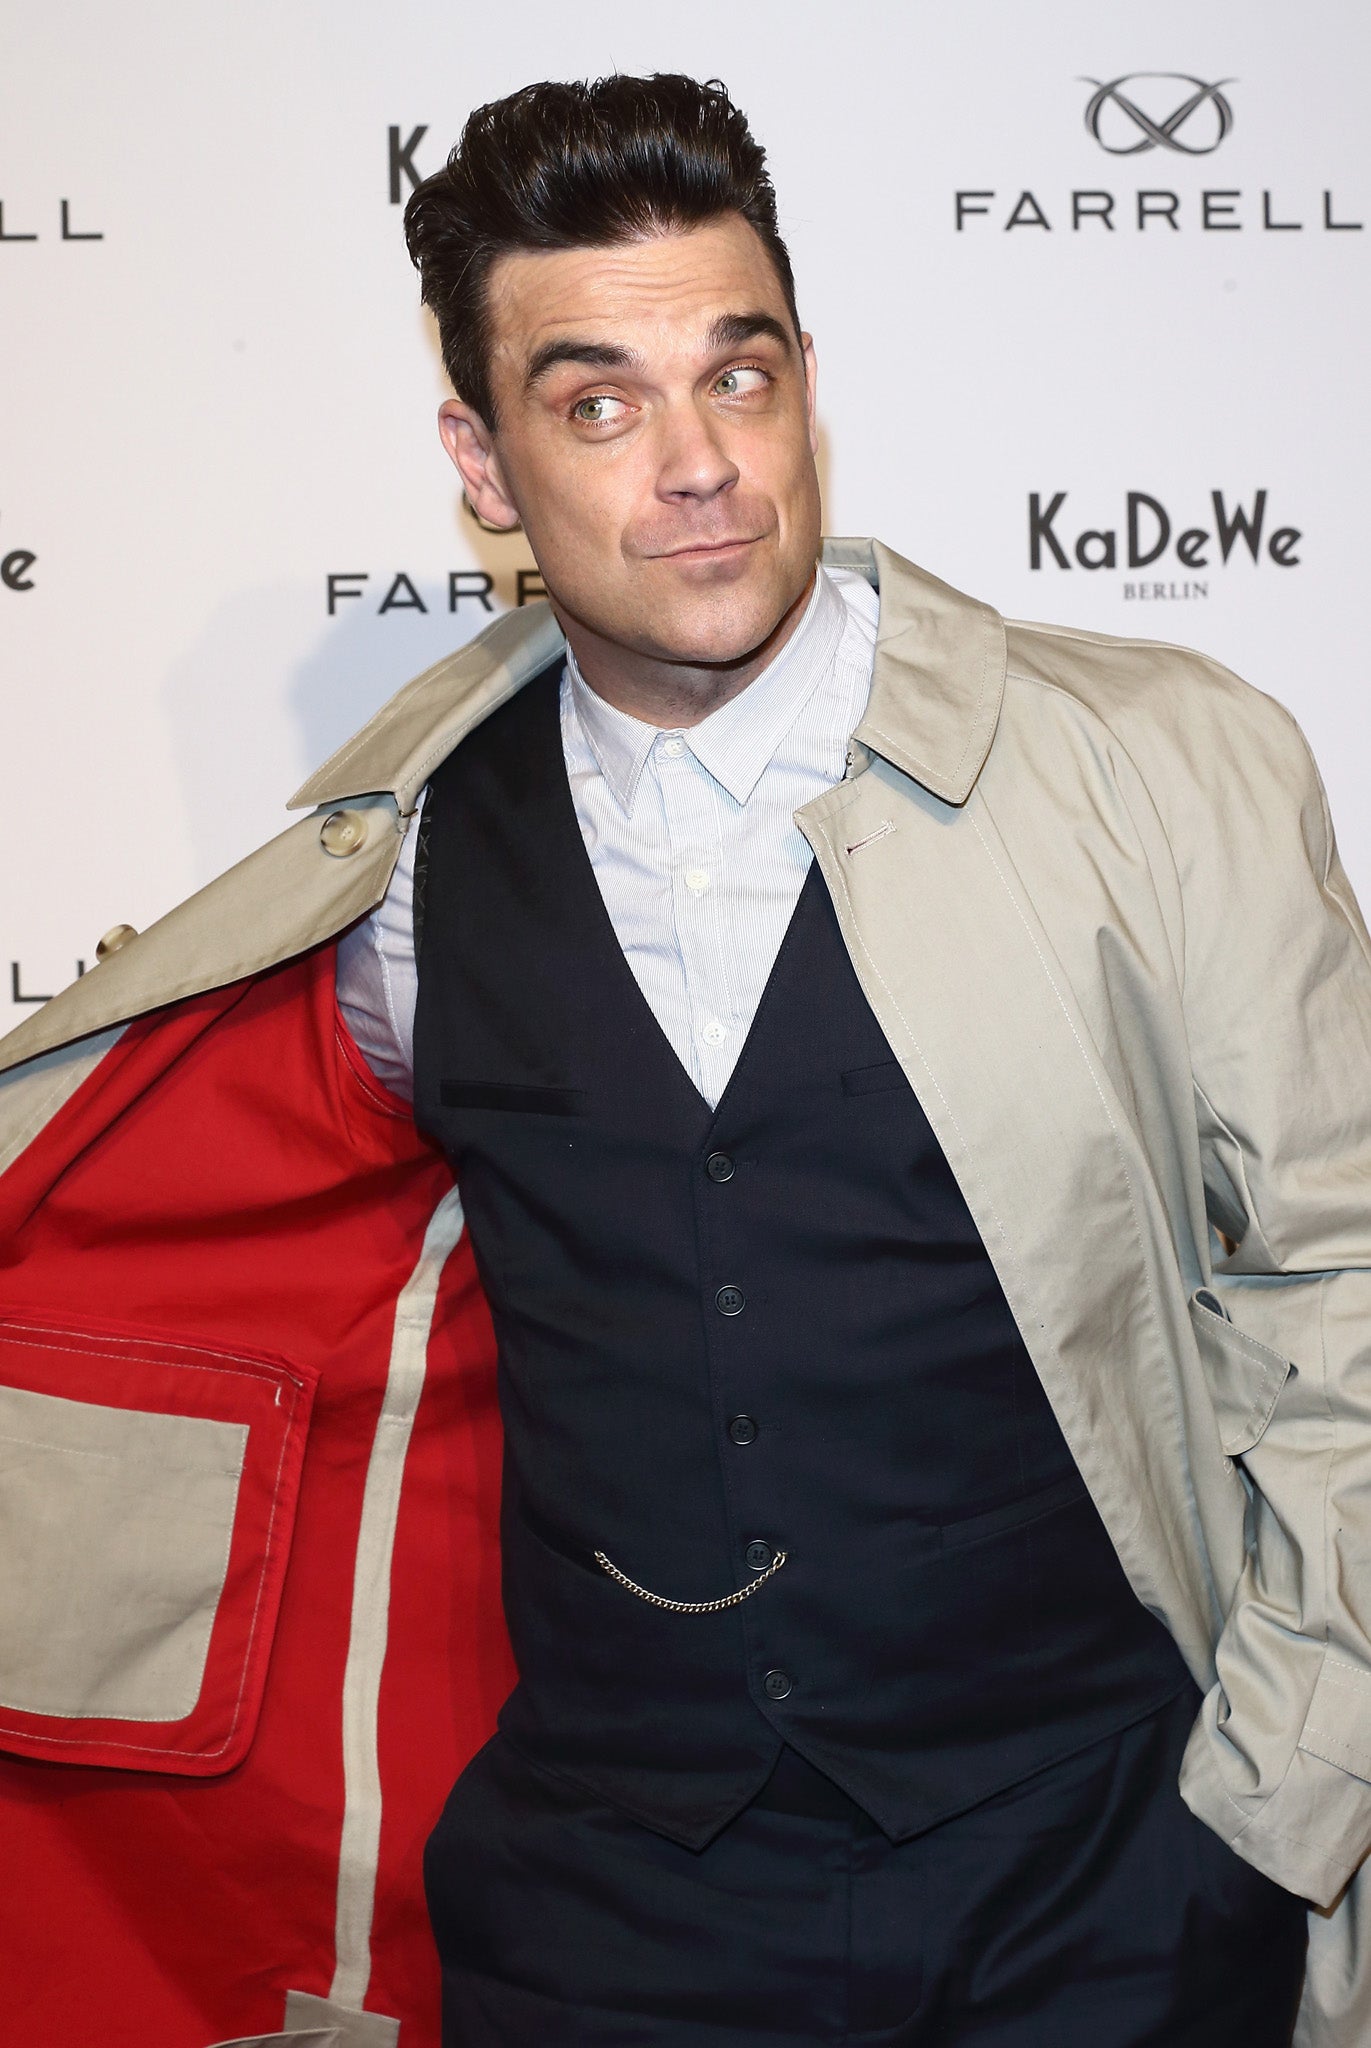 Robbie Williams of Take That